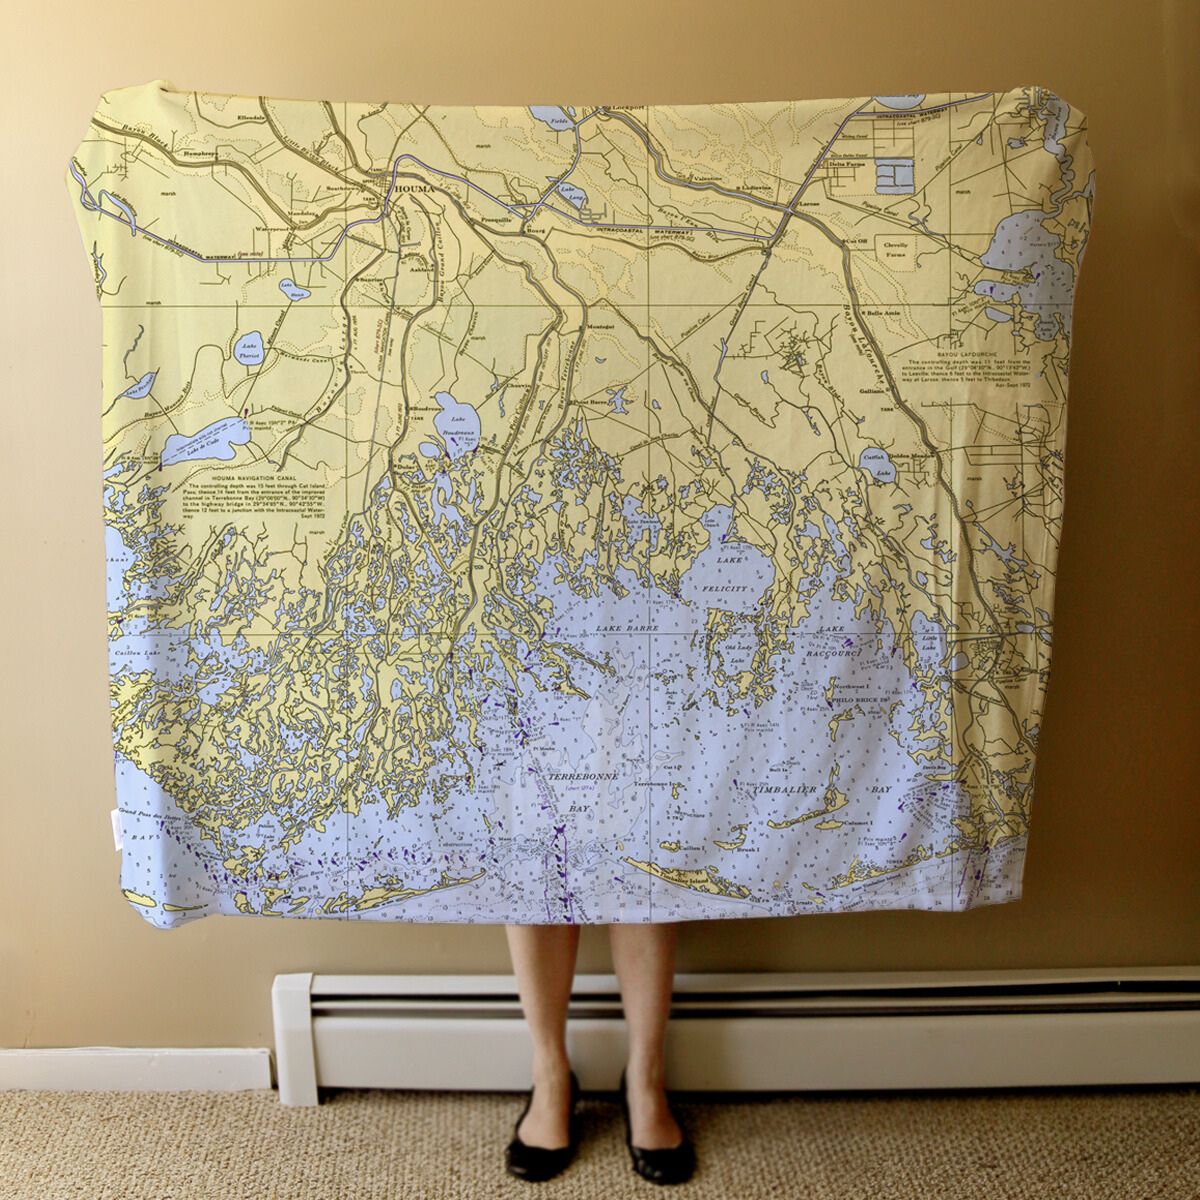 Nautical Chart Blanket, Locations in Louisiana